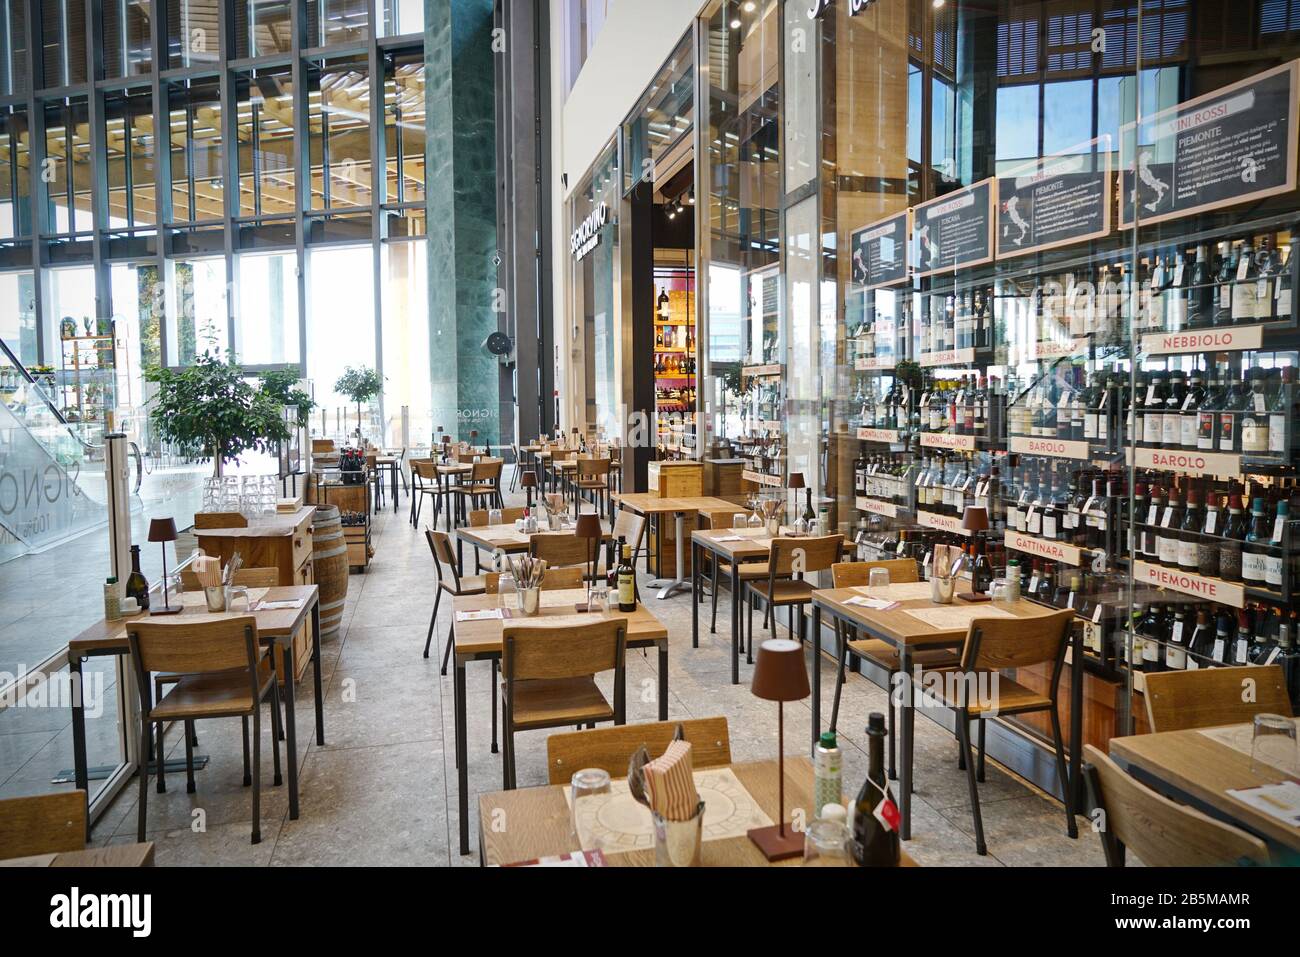 Coronavirus impact, empty restaurant and cafeteria tables.  Milan, Italy - March 2020 Stock Photo